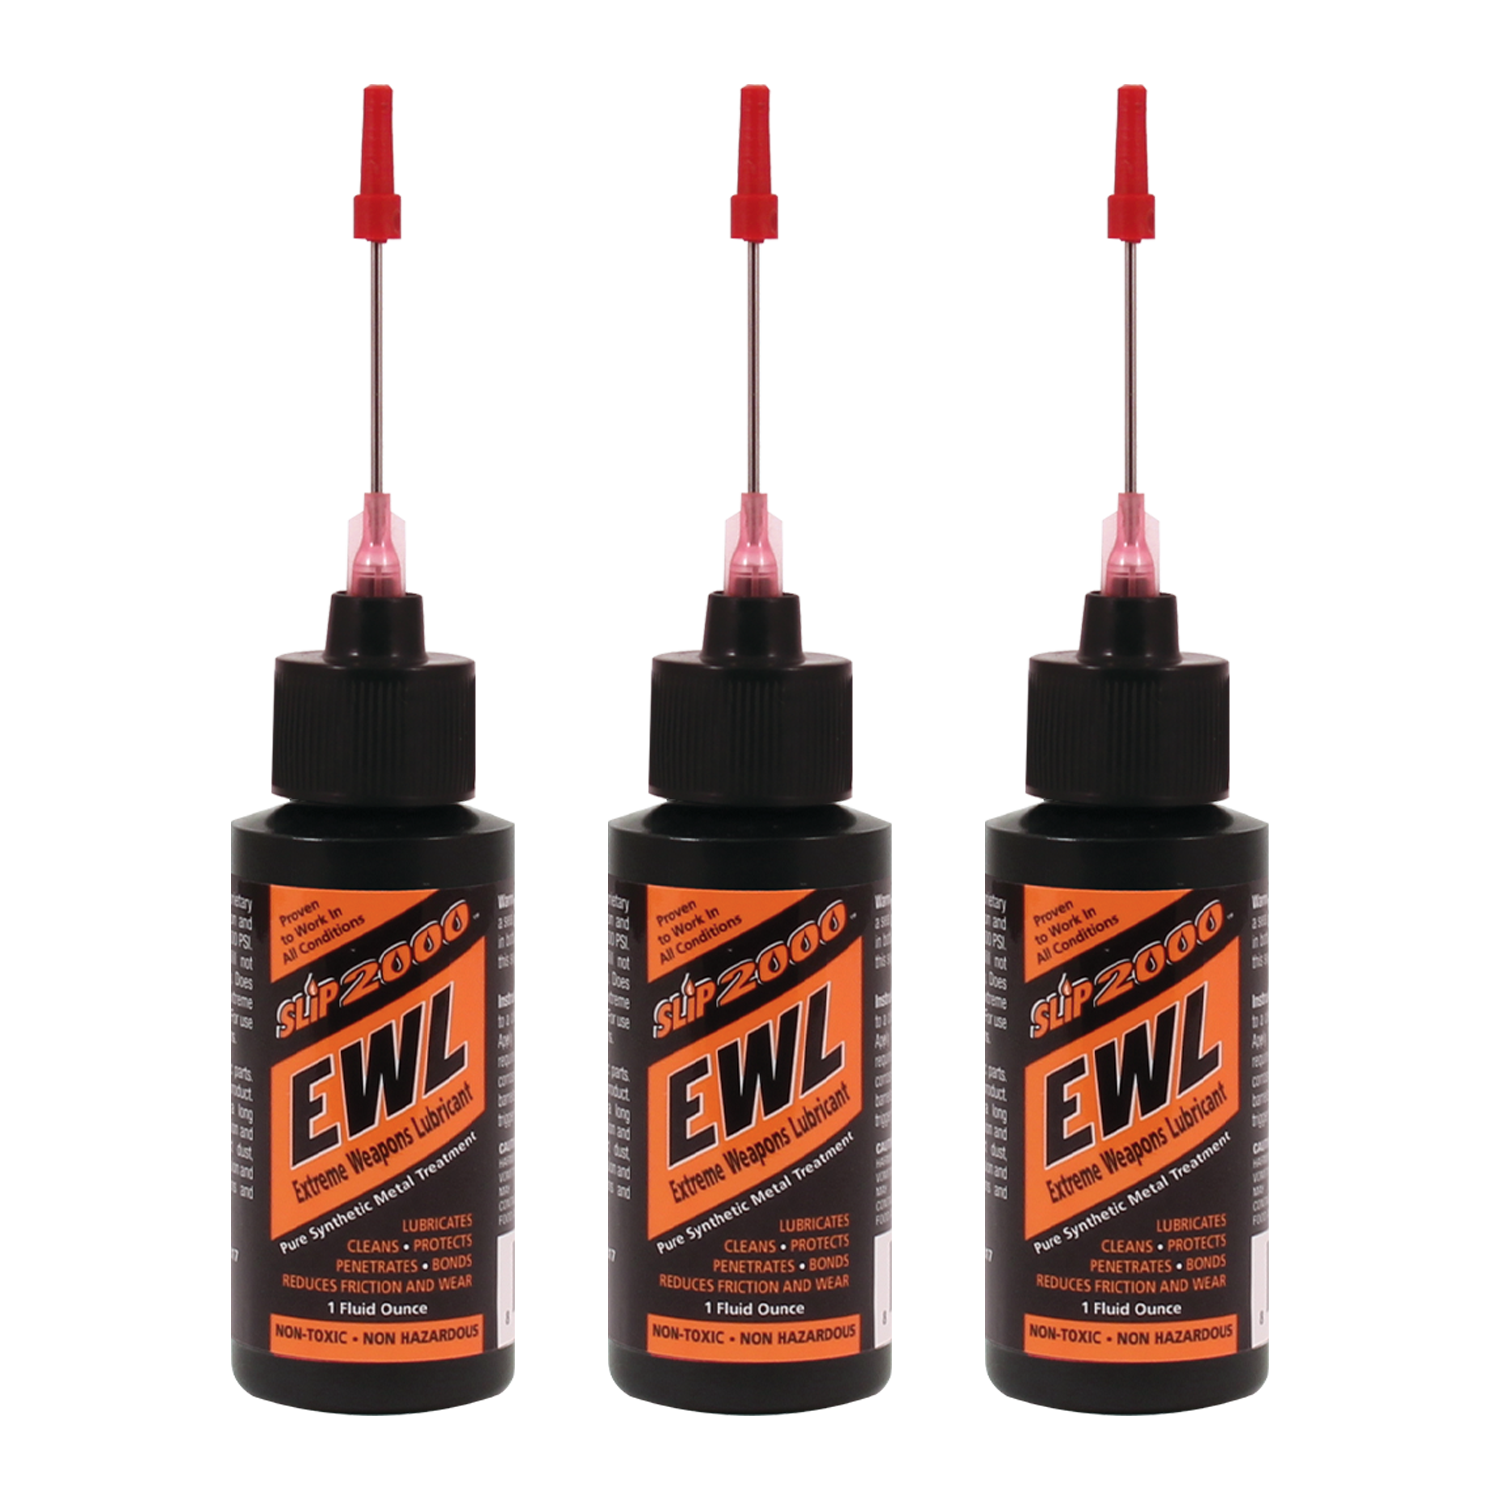 1oz. Empty EWL Bottles with Metal Needle Tips - 3 Pack